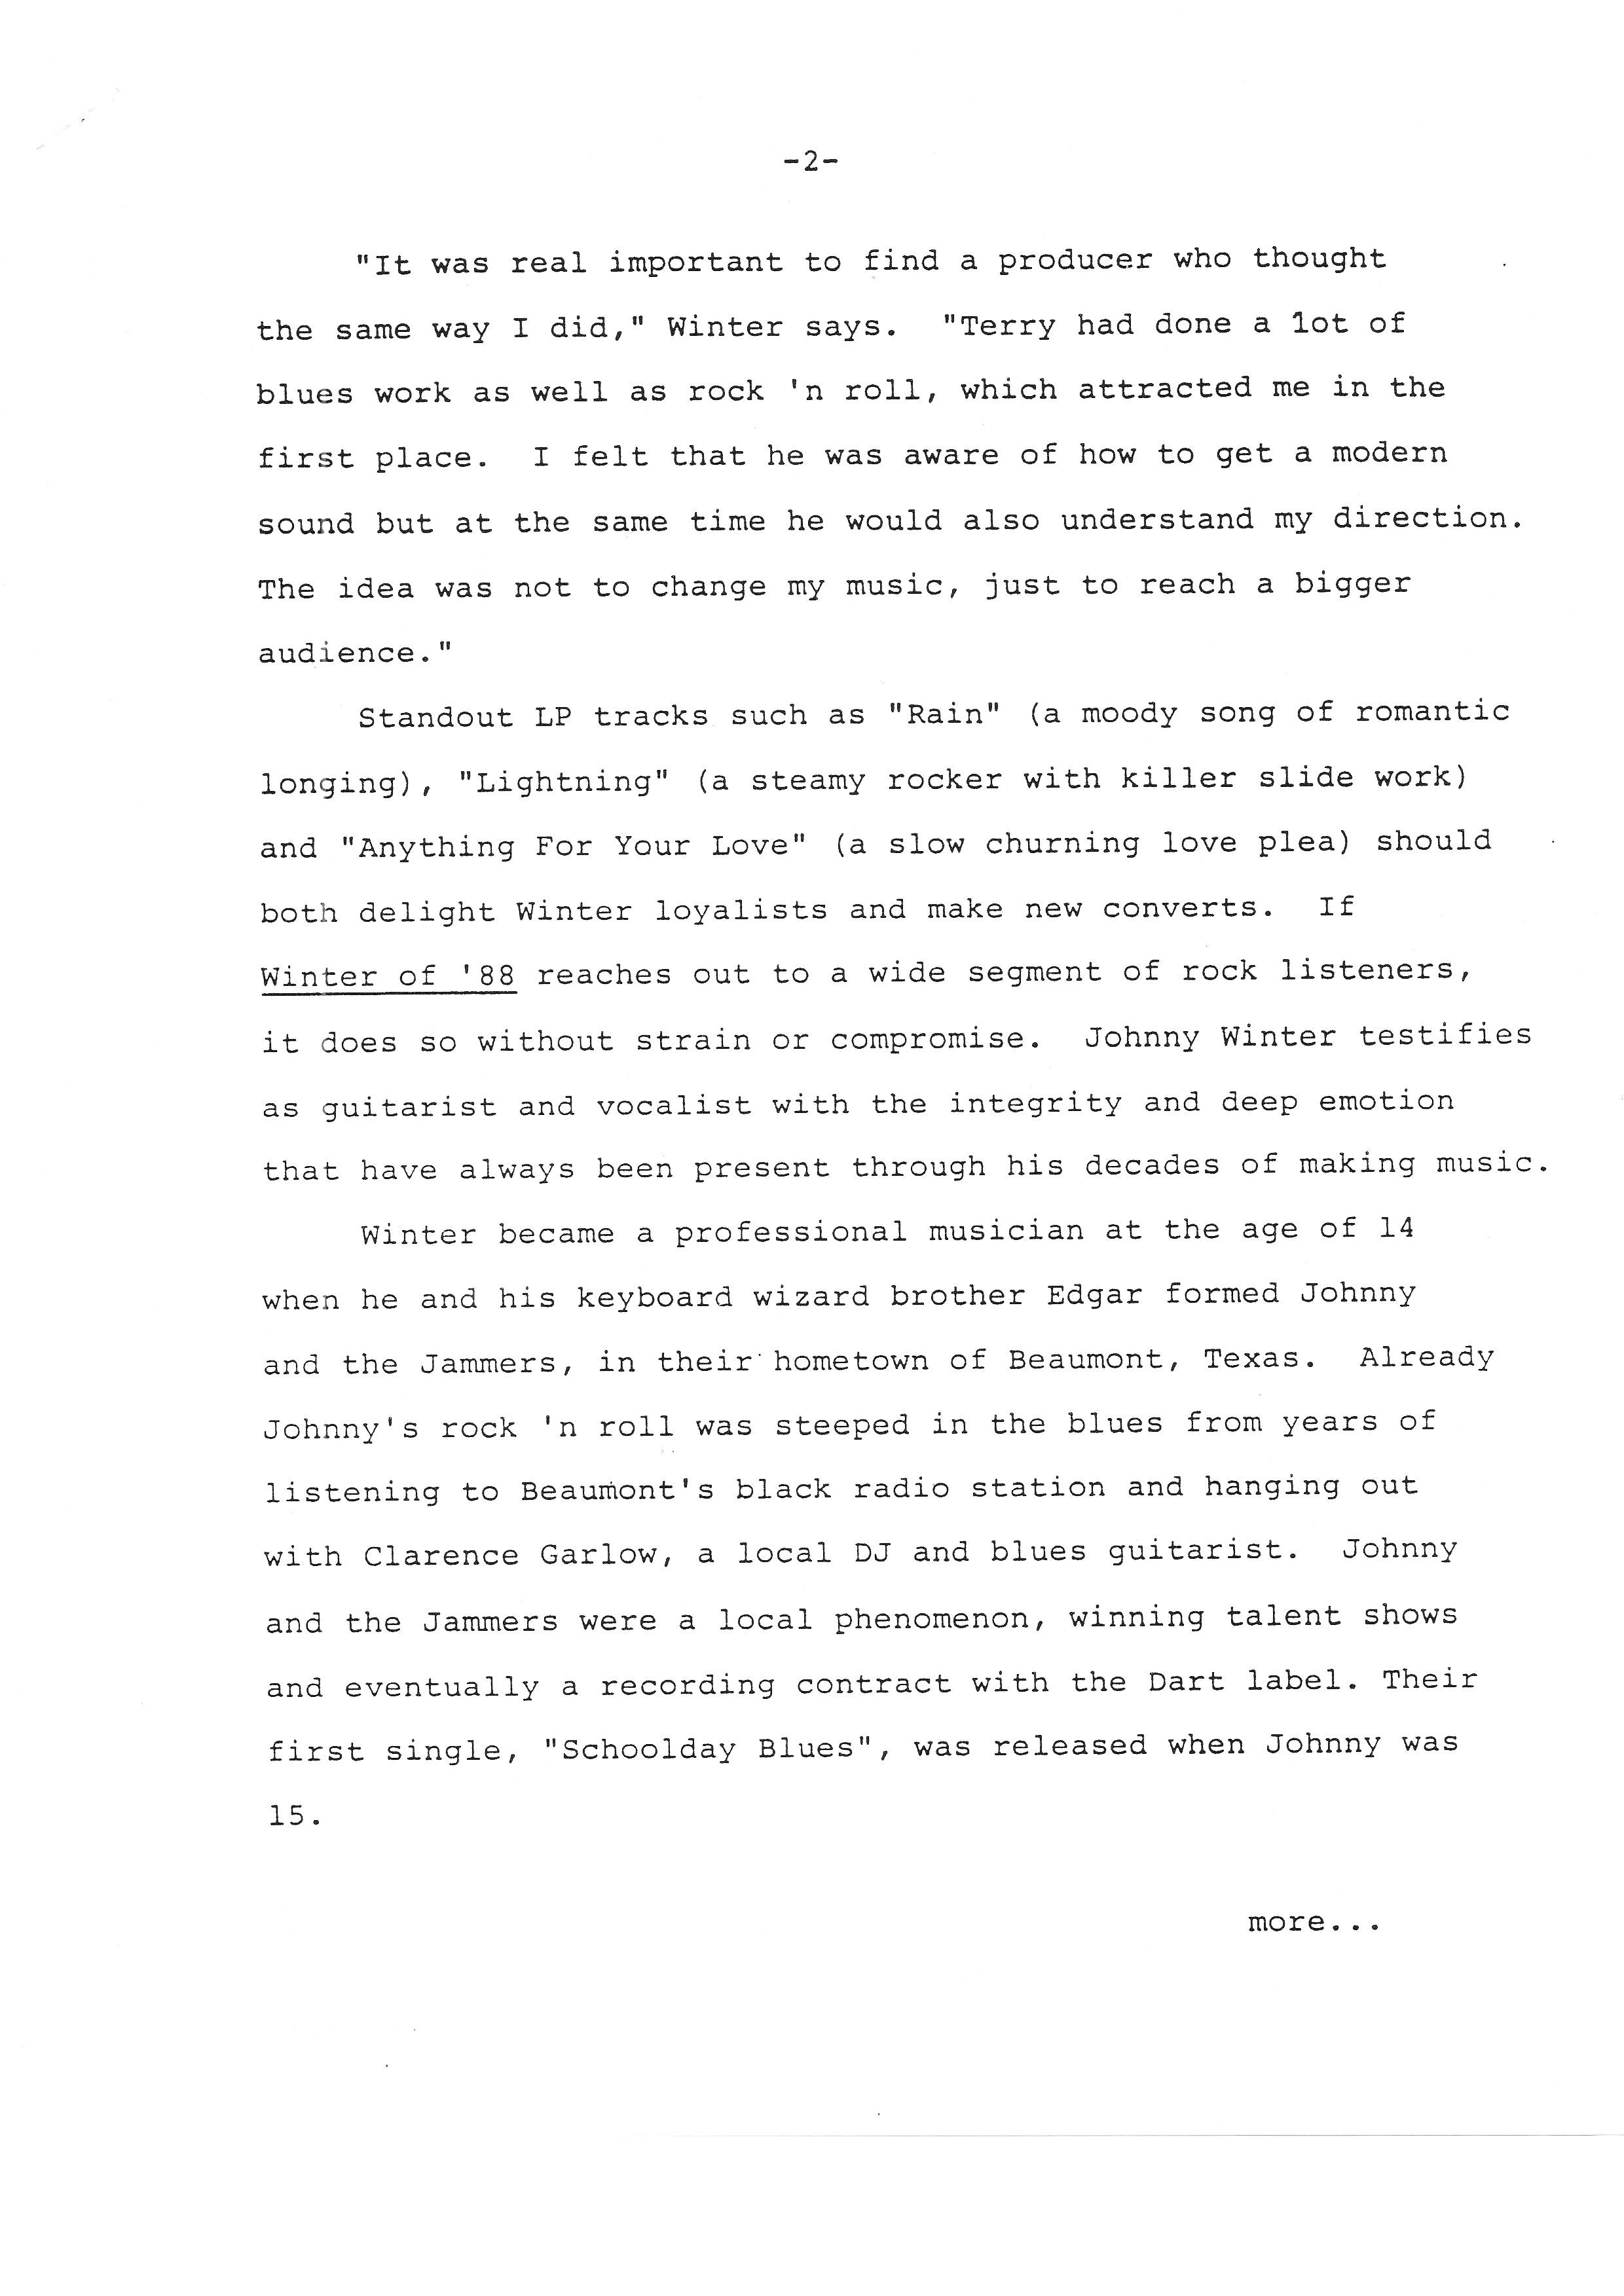 Press release of "Winter of '88" incl Johnny Winter career description, by Slatus Management Part II/V